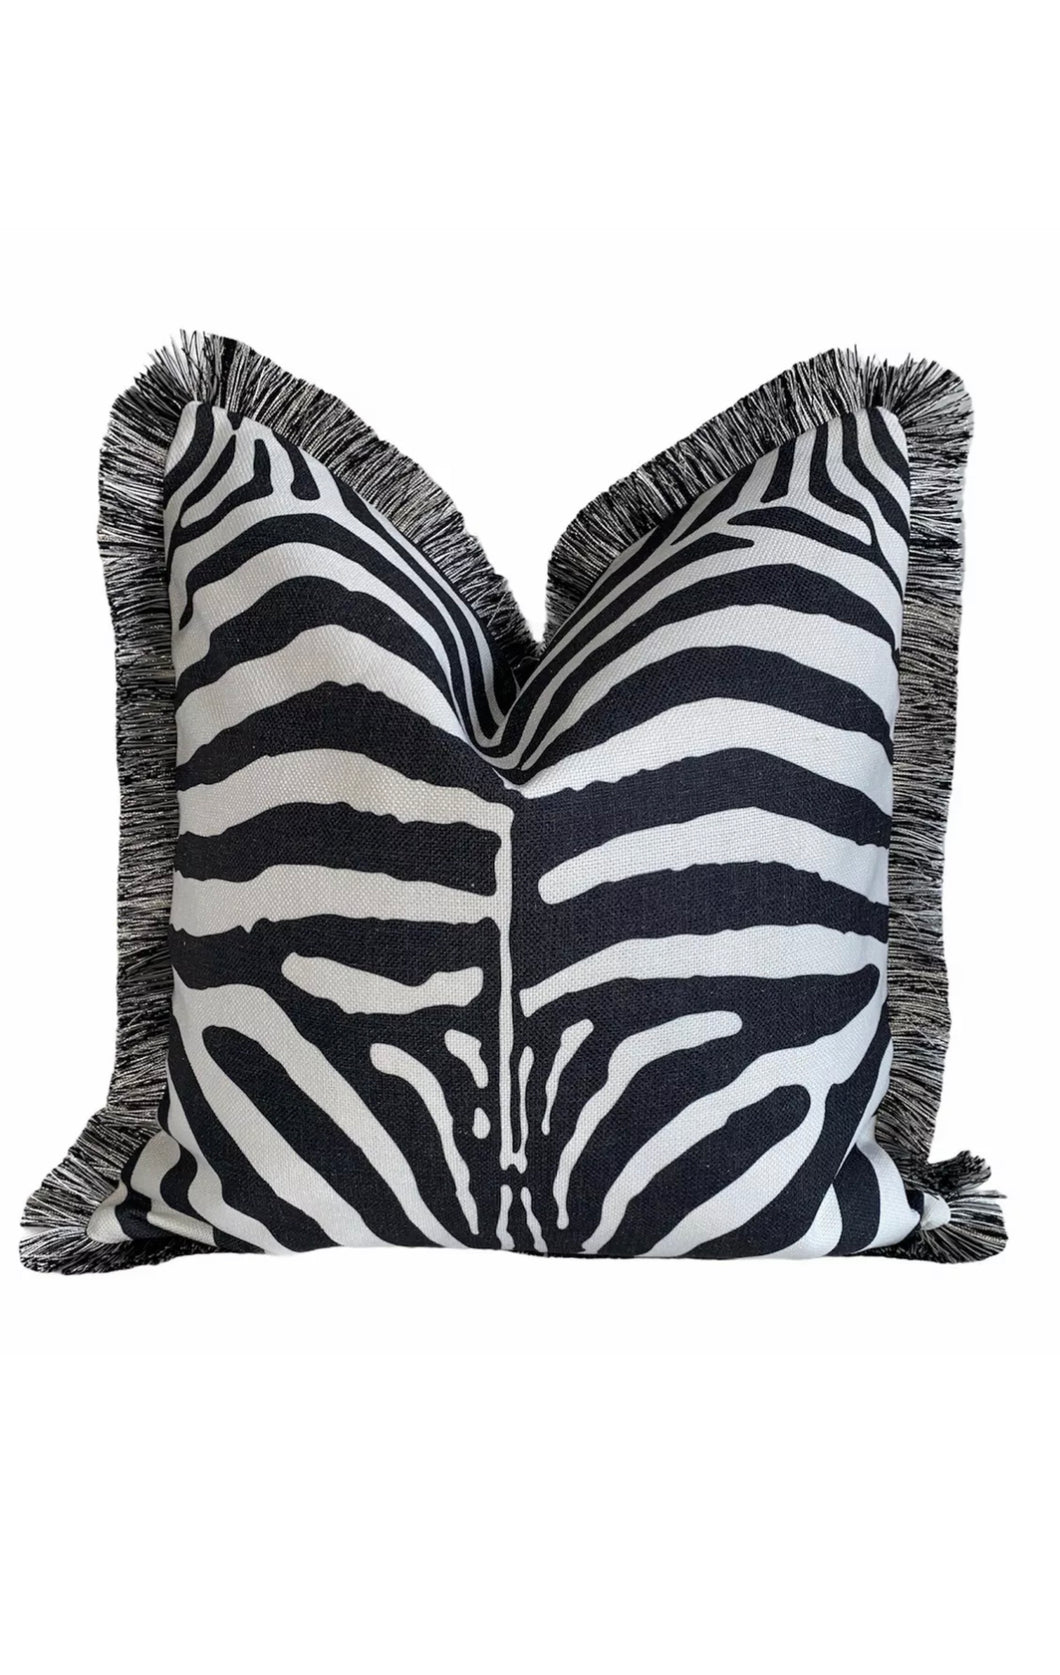 Zebra Print Cushion SKU 66534509 | Pillow Animal Print Black and White Fringe Monochrome